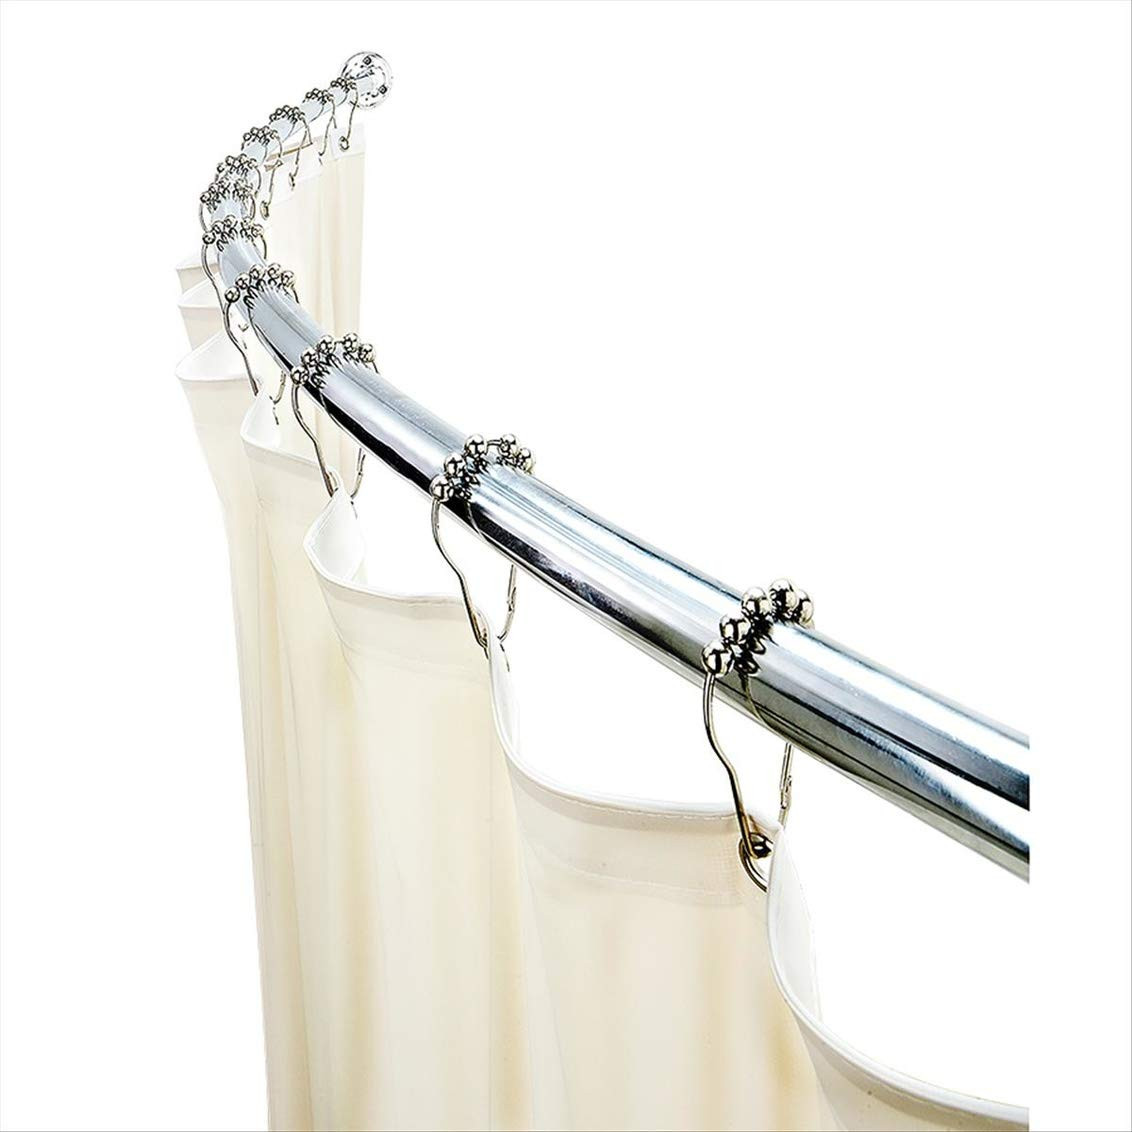 Bathroom Shower Curtain Rods
 Bath Bliss Wall Mounted Adjustable Curved Bathroom Shower